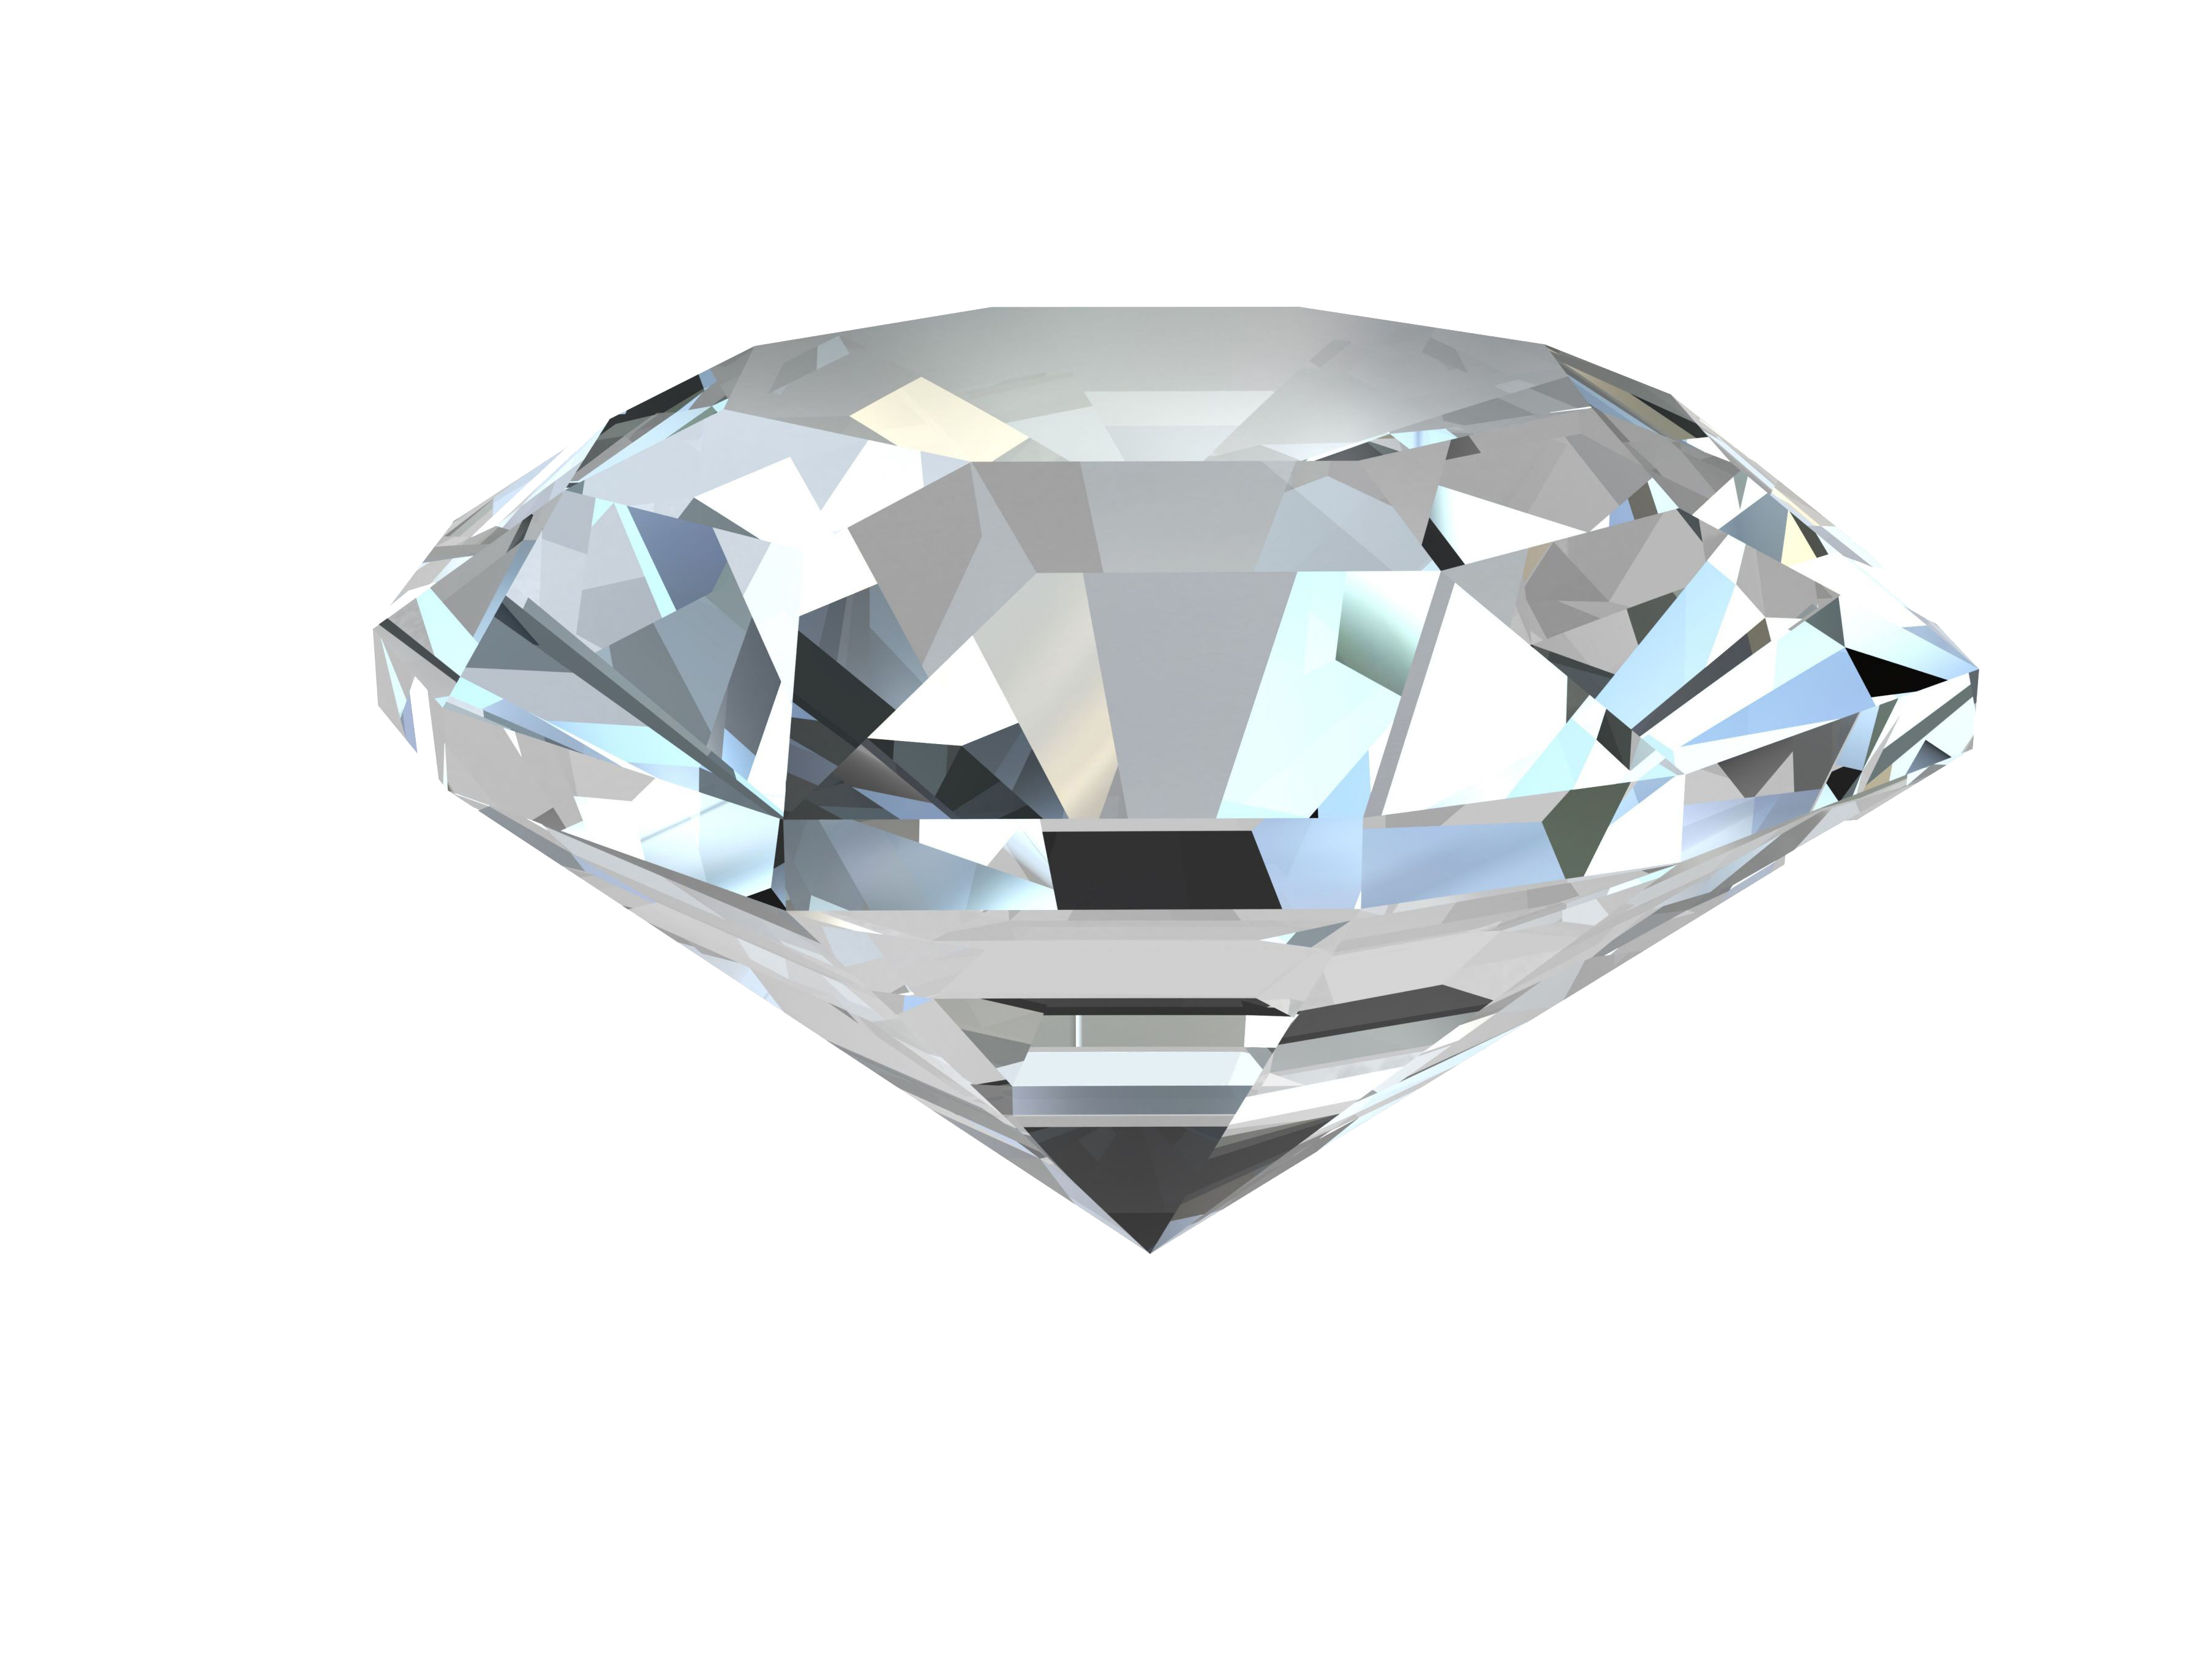 High Res Diamond Image